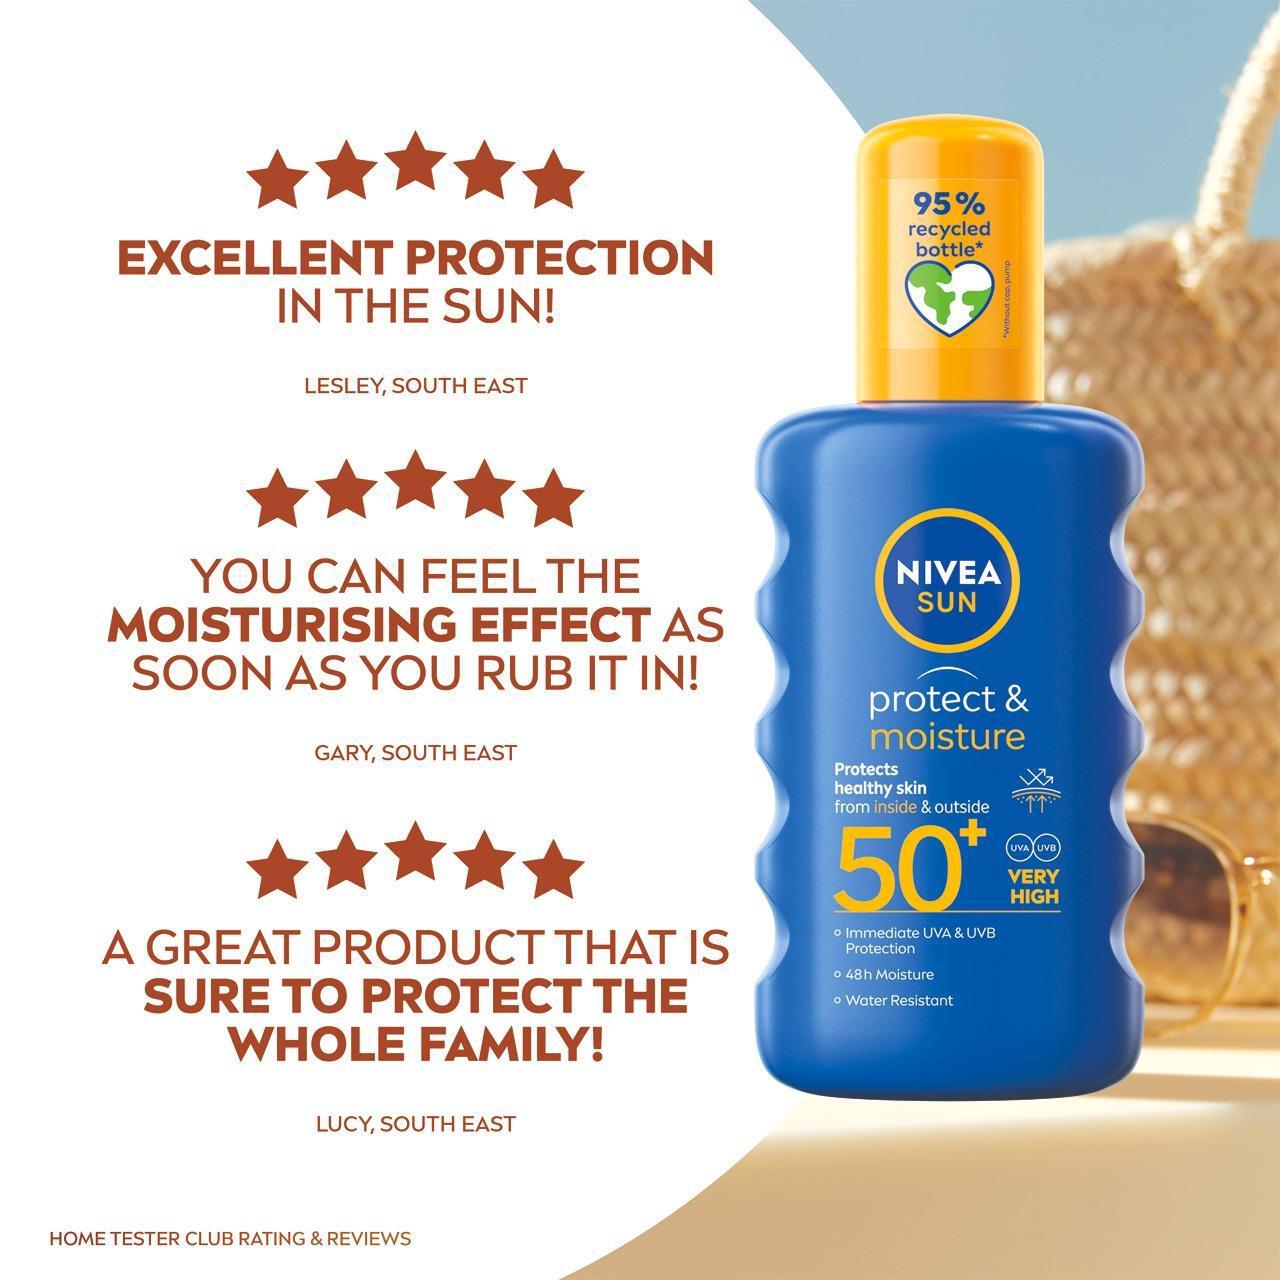 NIVEA SUN Protect & Moisture SPF 50+ Sun Lotion Spray 200ml